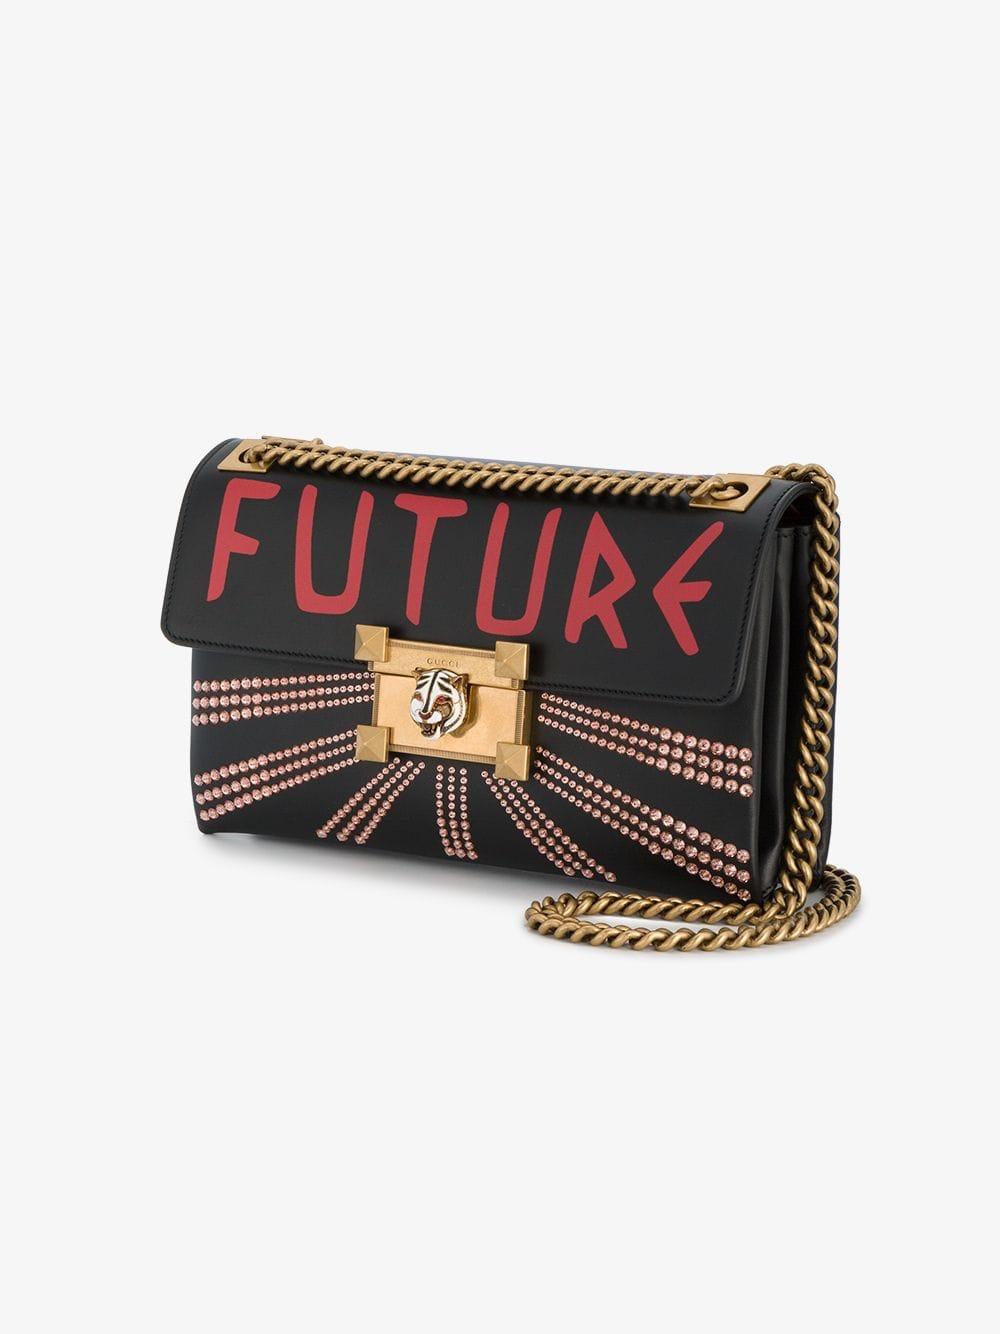 Gucci Leather Linea Future Shoulder Bag in Black - Lyst